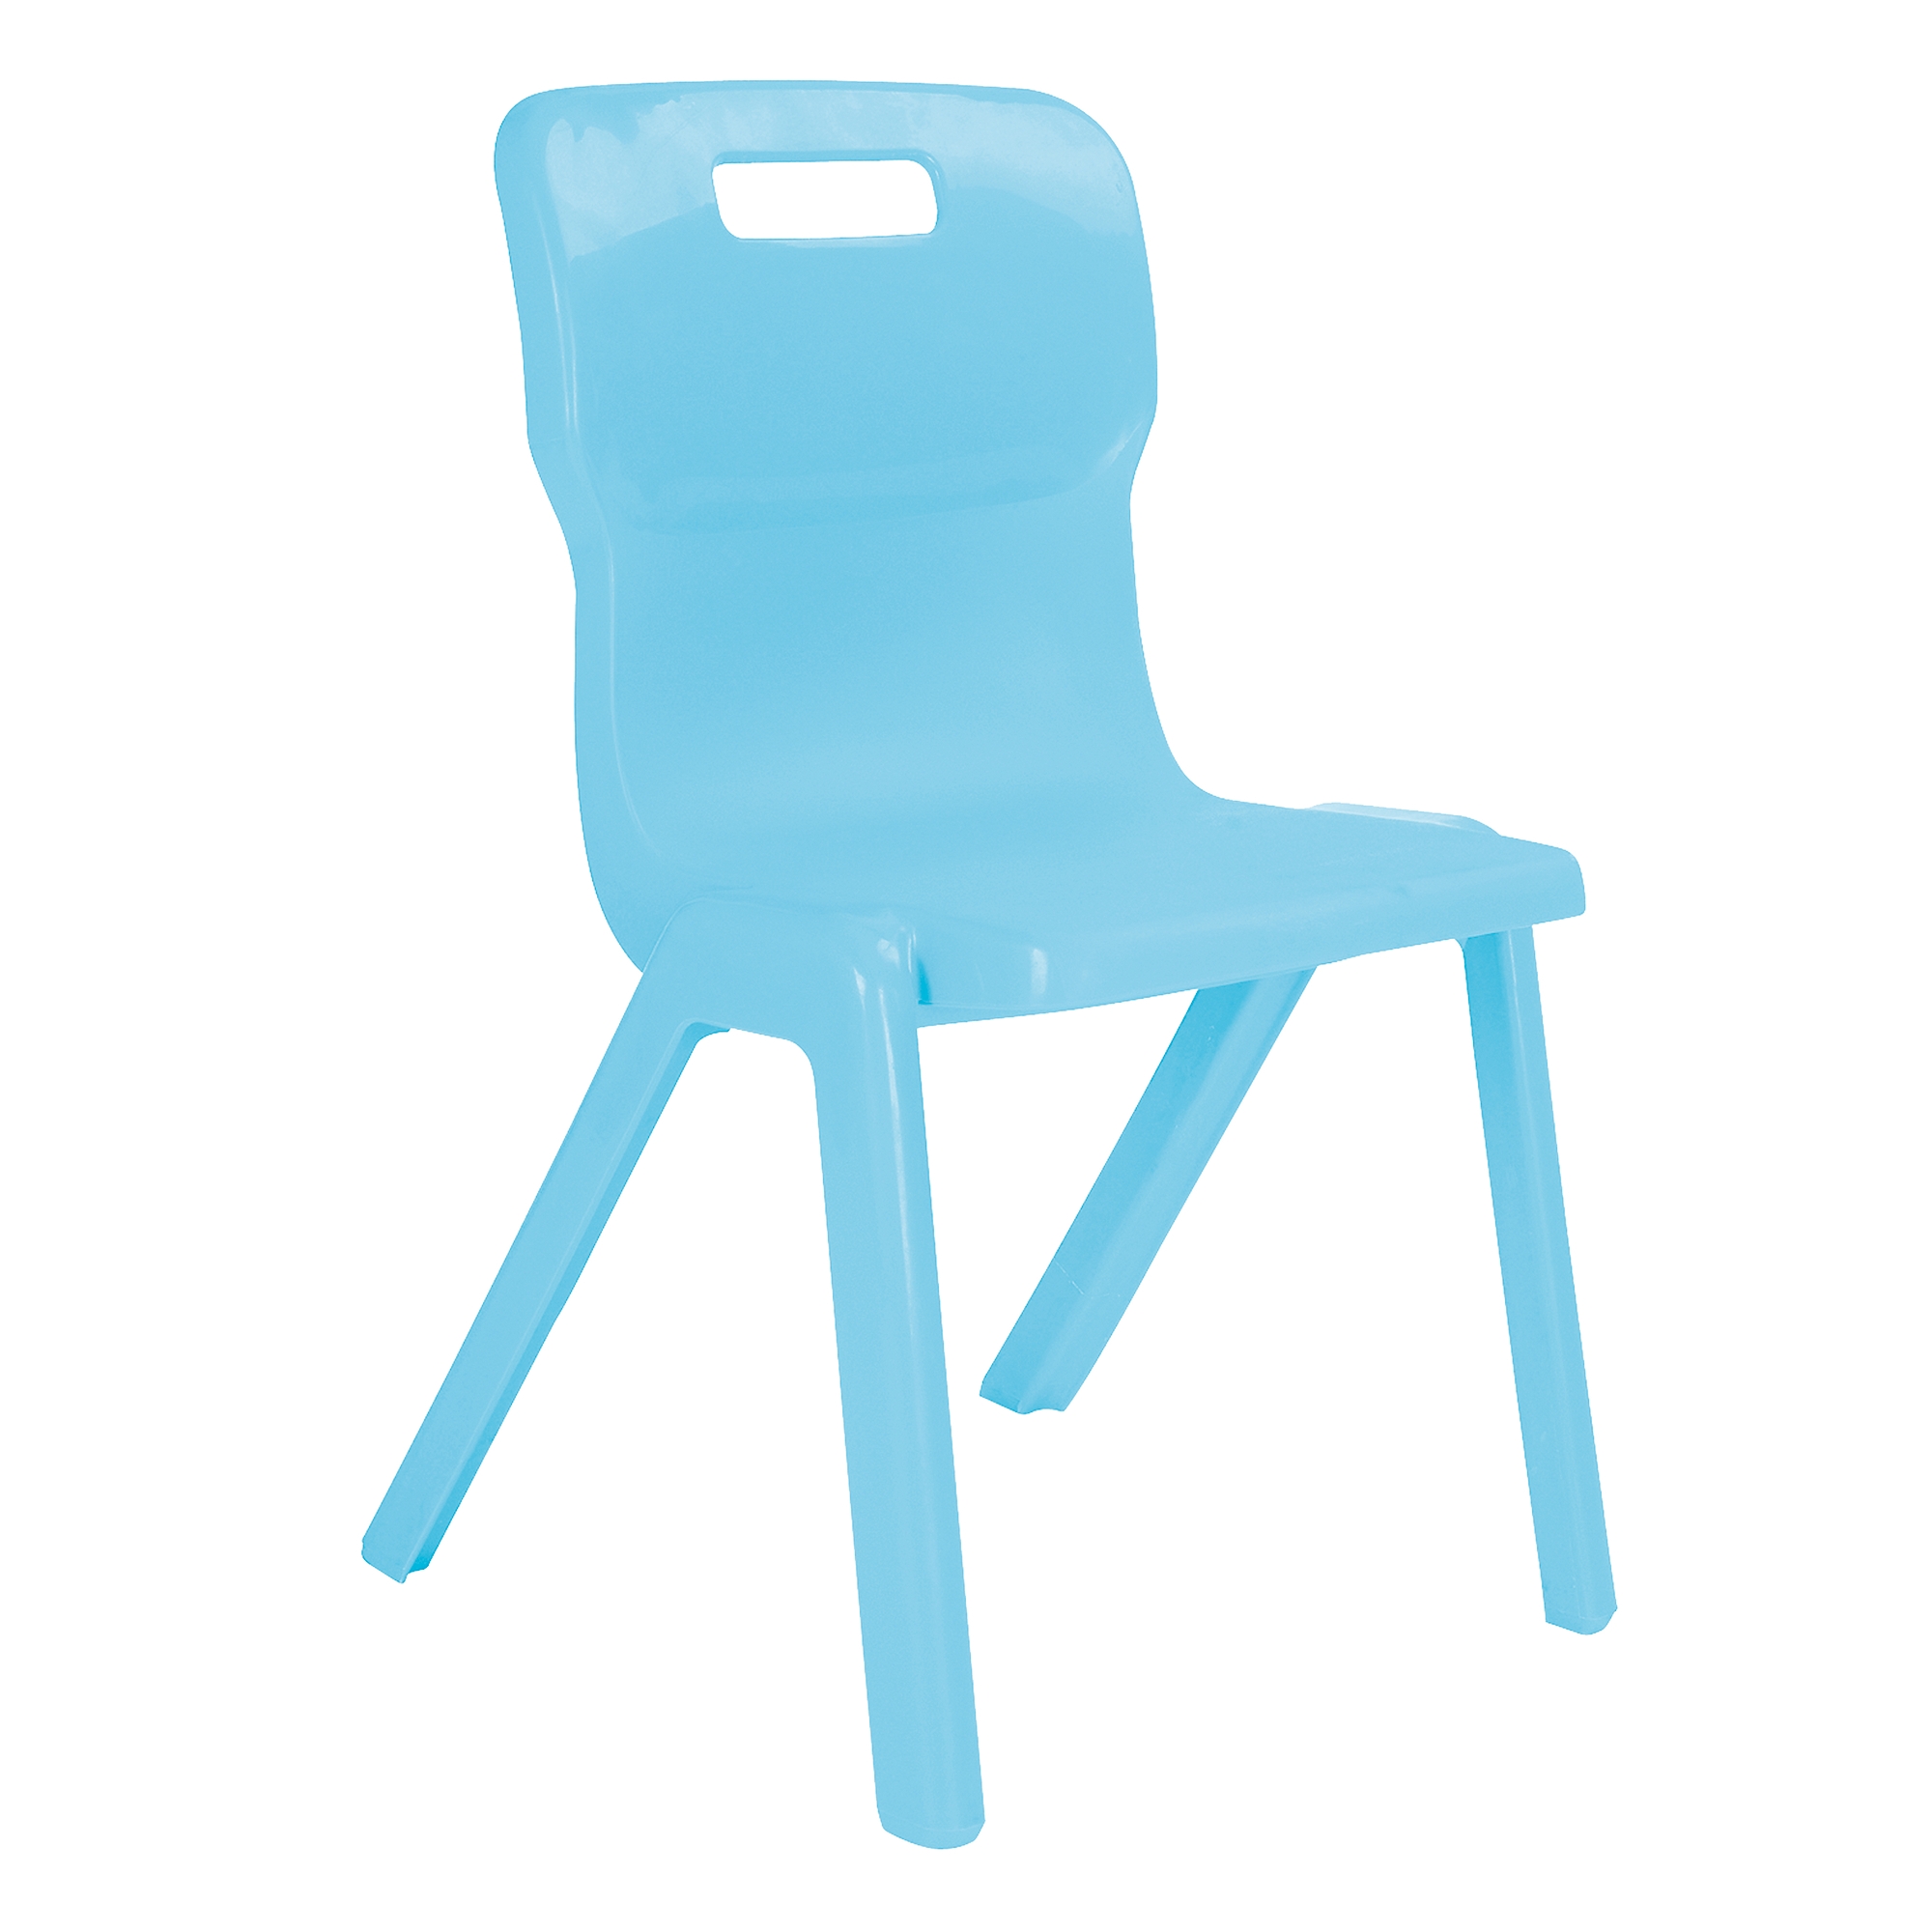 One Piece Titan Chair - Size 4 Ages 8-11 Sky Blue